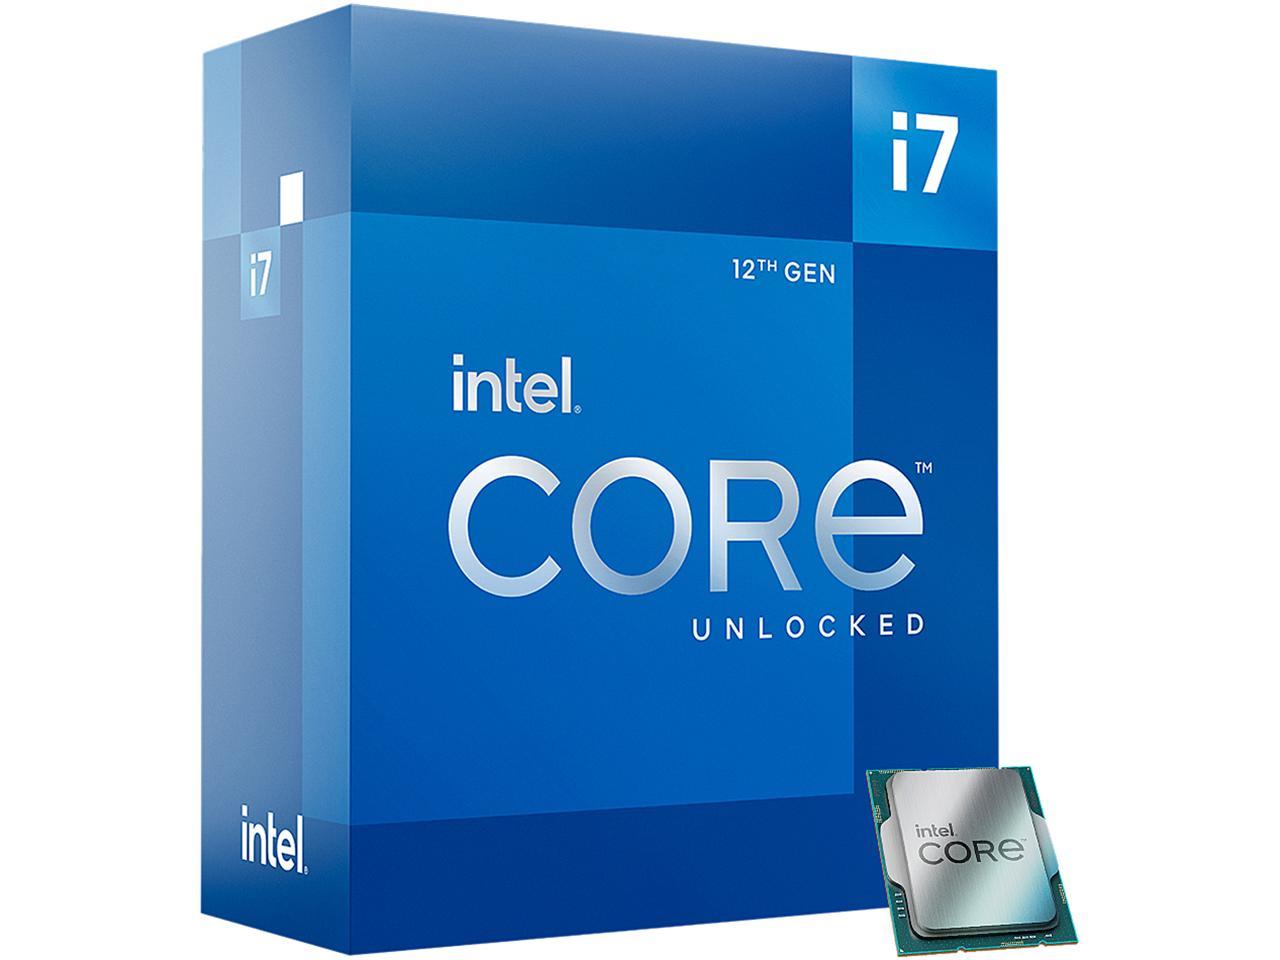 Intel Core i7-12700K - 12th Gen Alder Lake 12-Core (8P+4E) 3.6 GHz LGA 1700 125W Desktop Processor with free Dying Light 2 game - $349.99 at Newegg